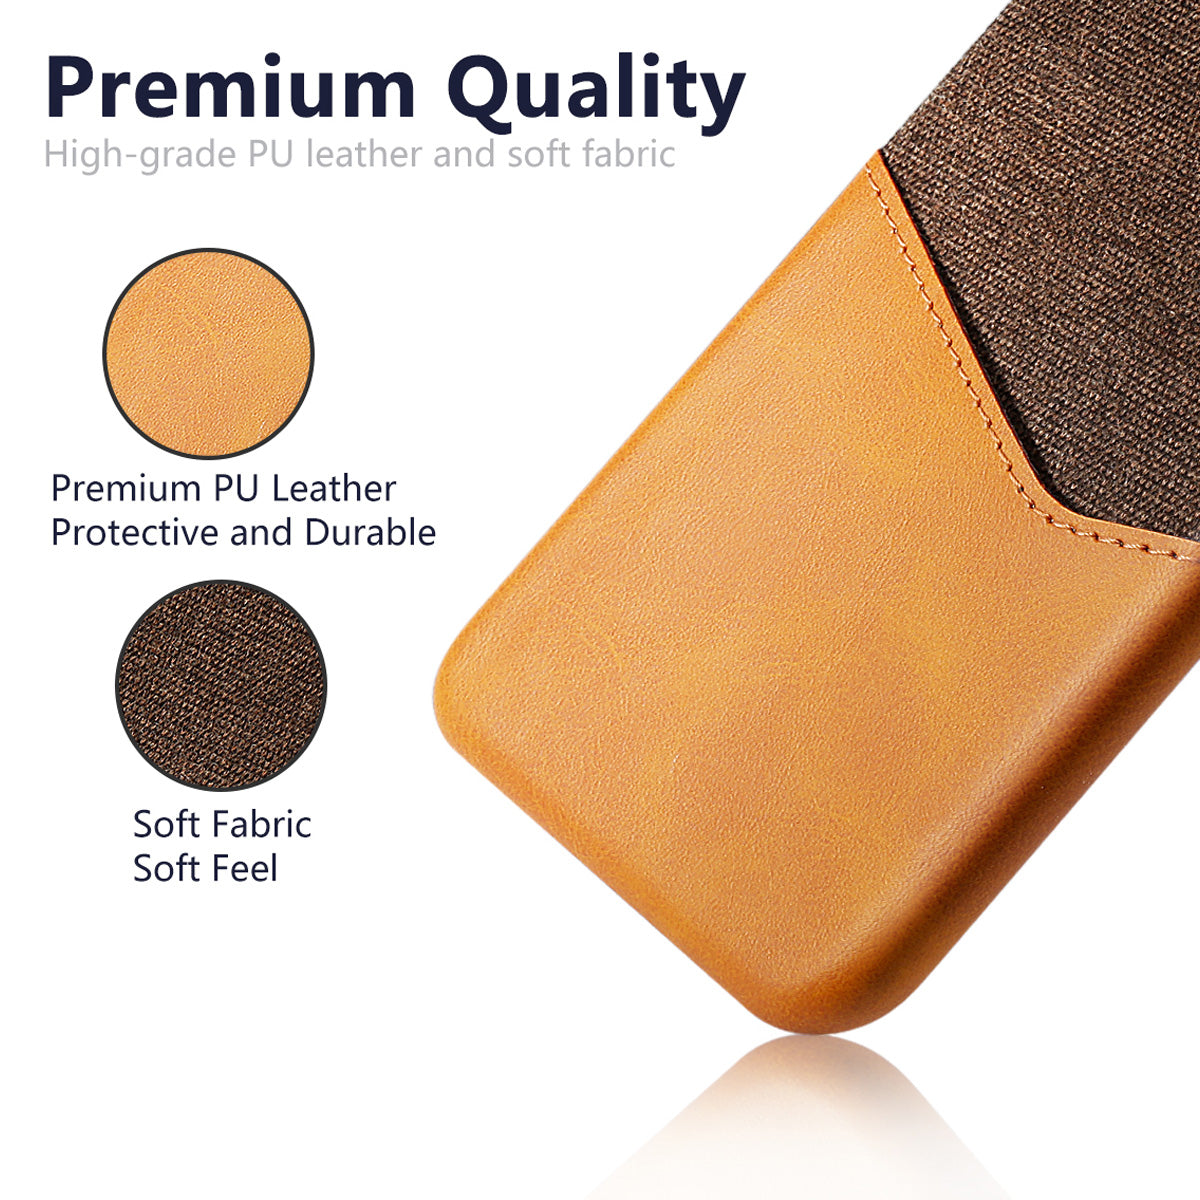 Samsung Galaxy S10 Lite high quality premium and unique designer leather case cover